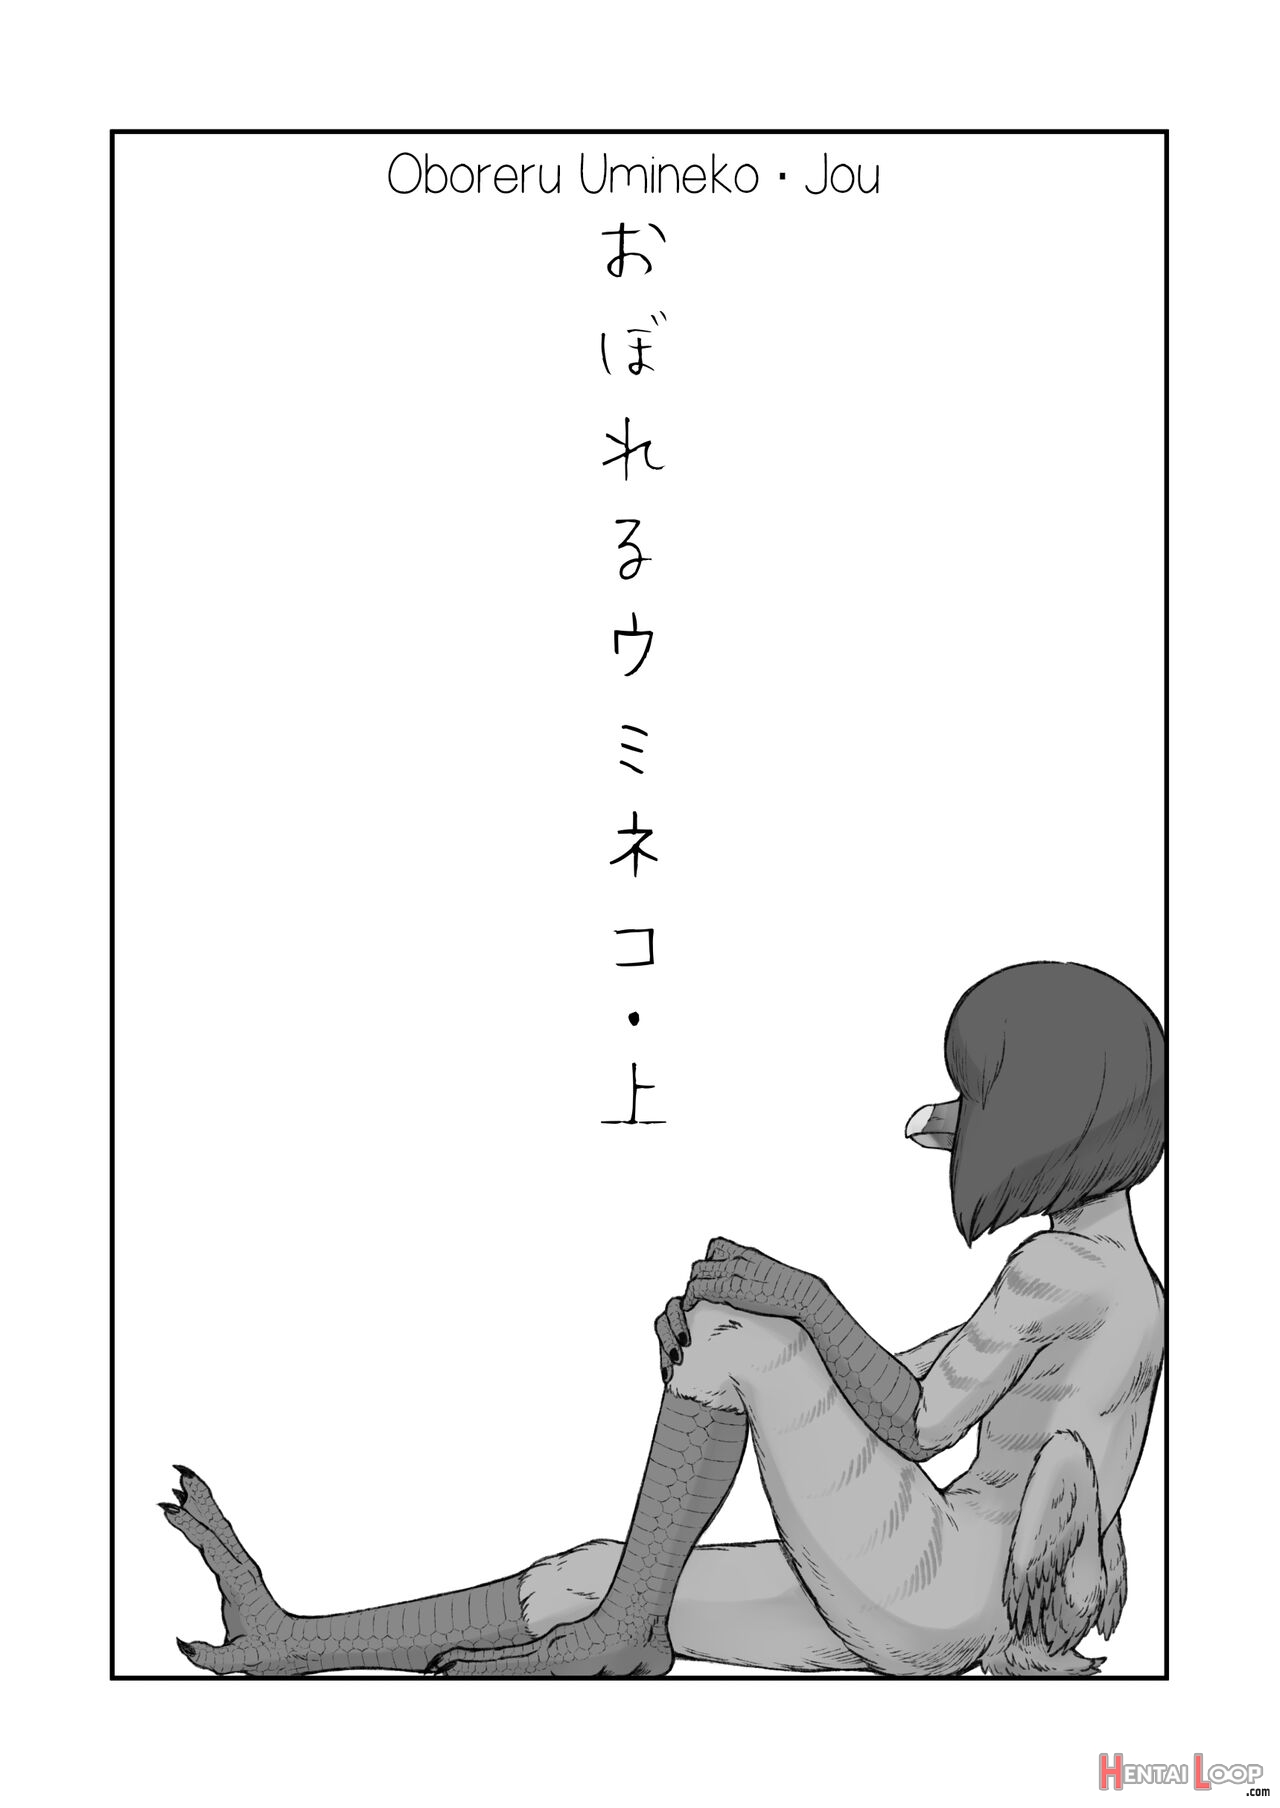 Oboreru Umineko Jou page 14